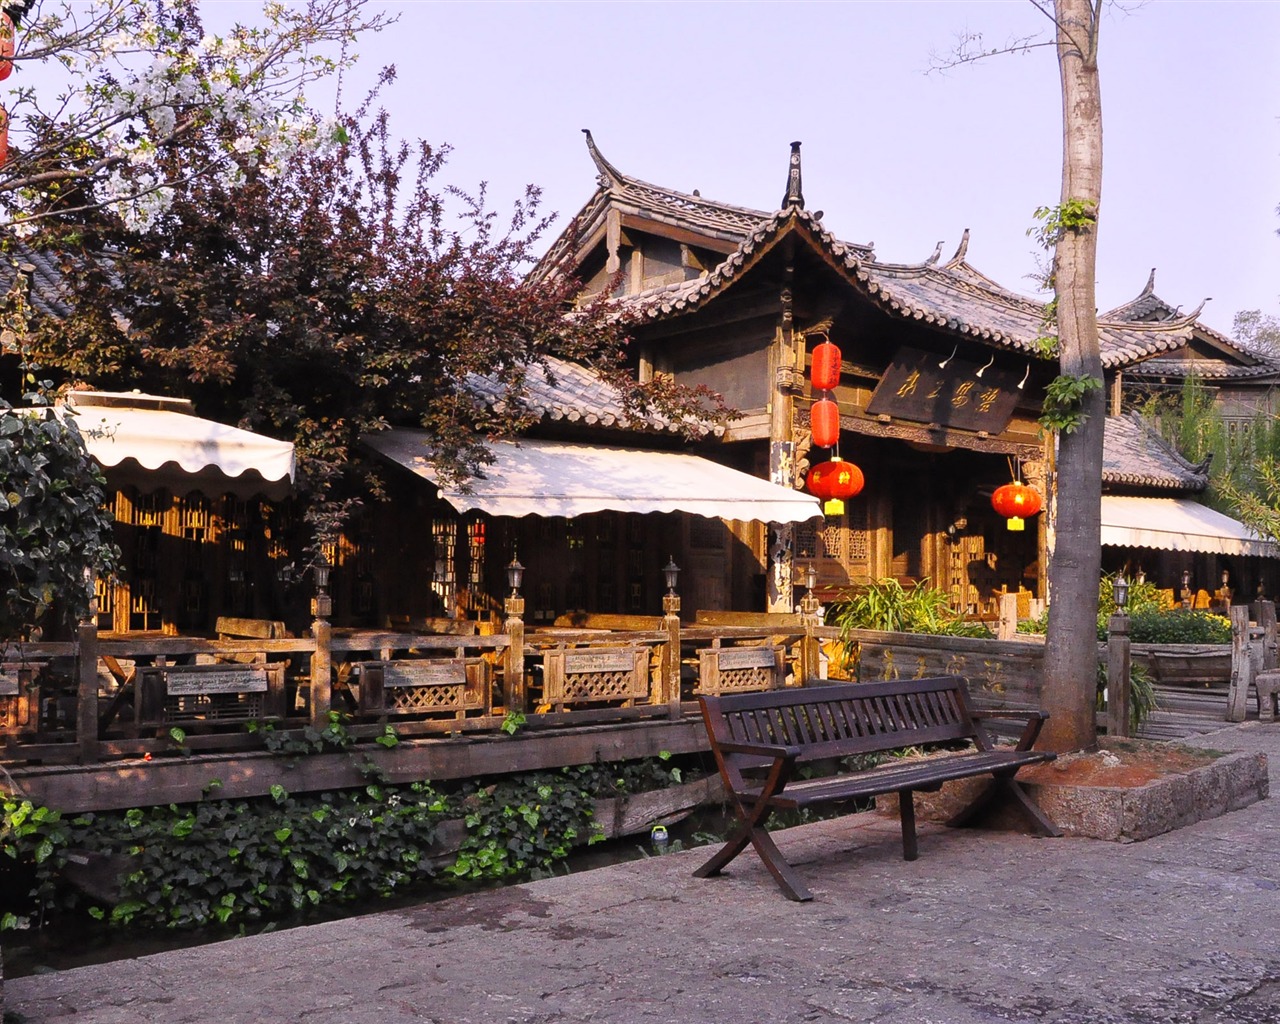 Lijiang ancient town atmosphere (2) (old Hong OK works) #1 - 1280x1024